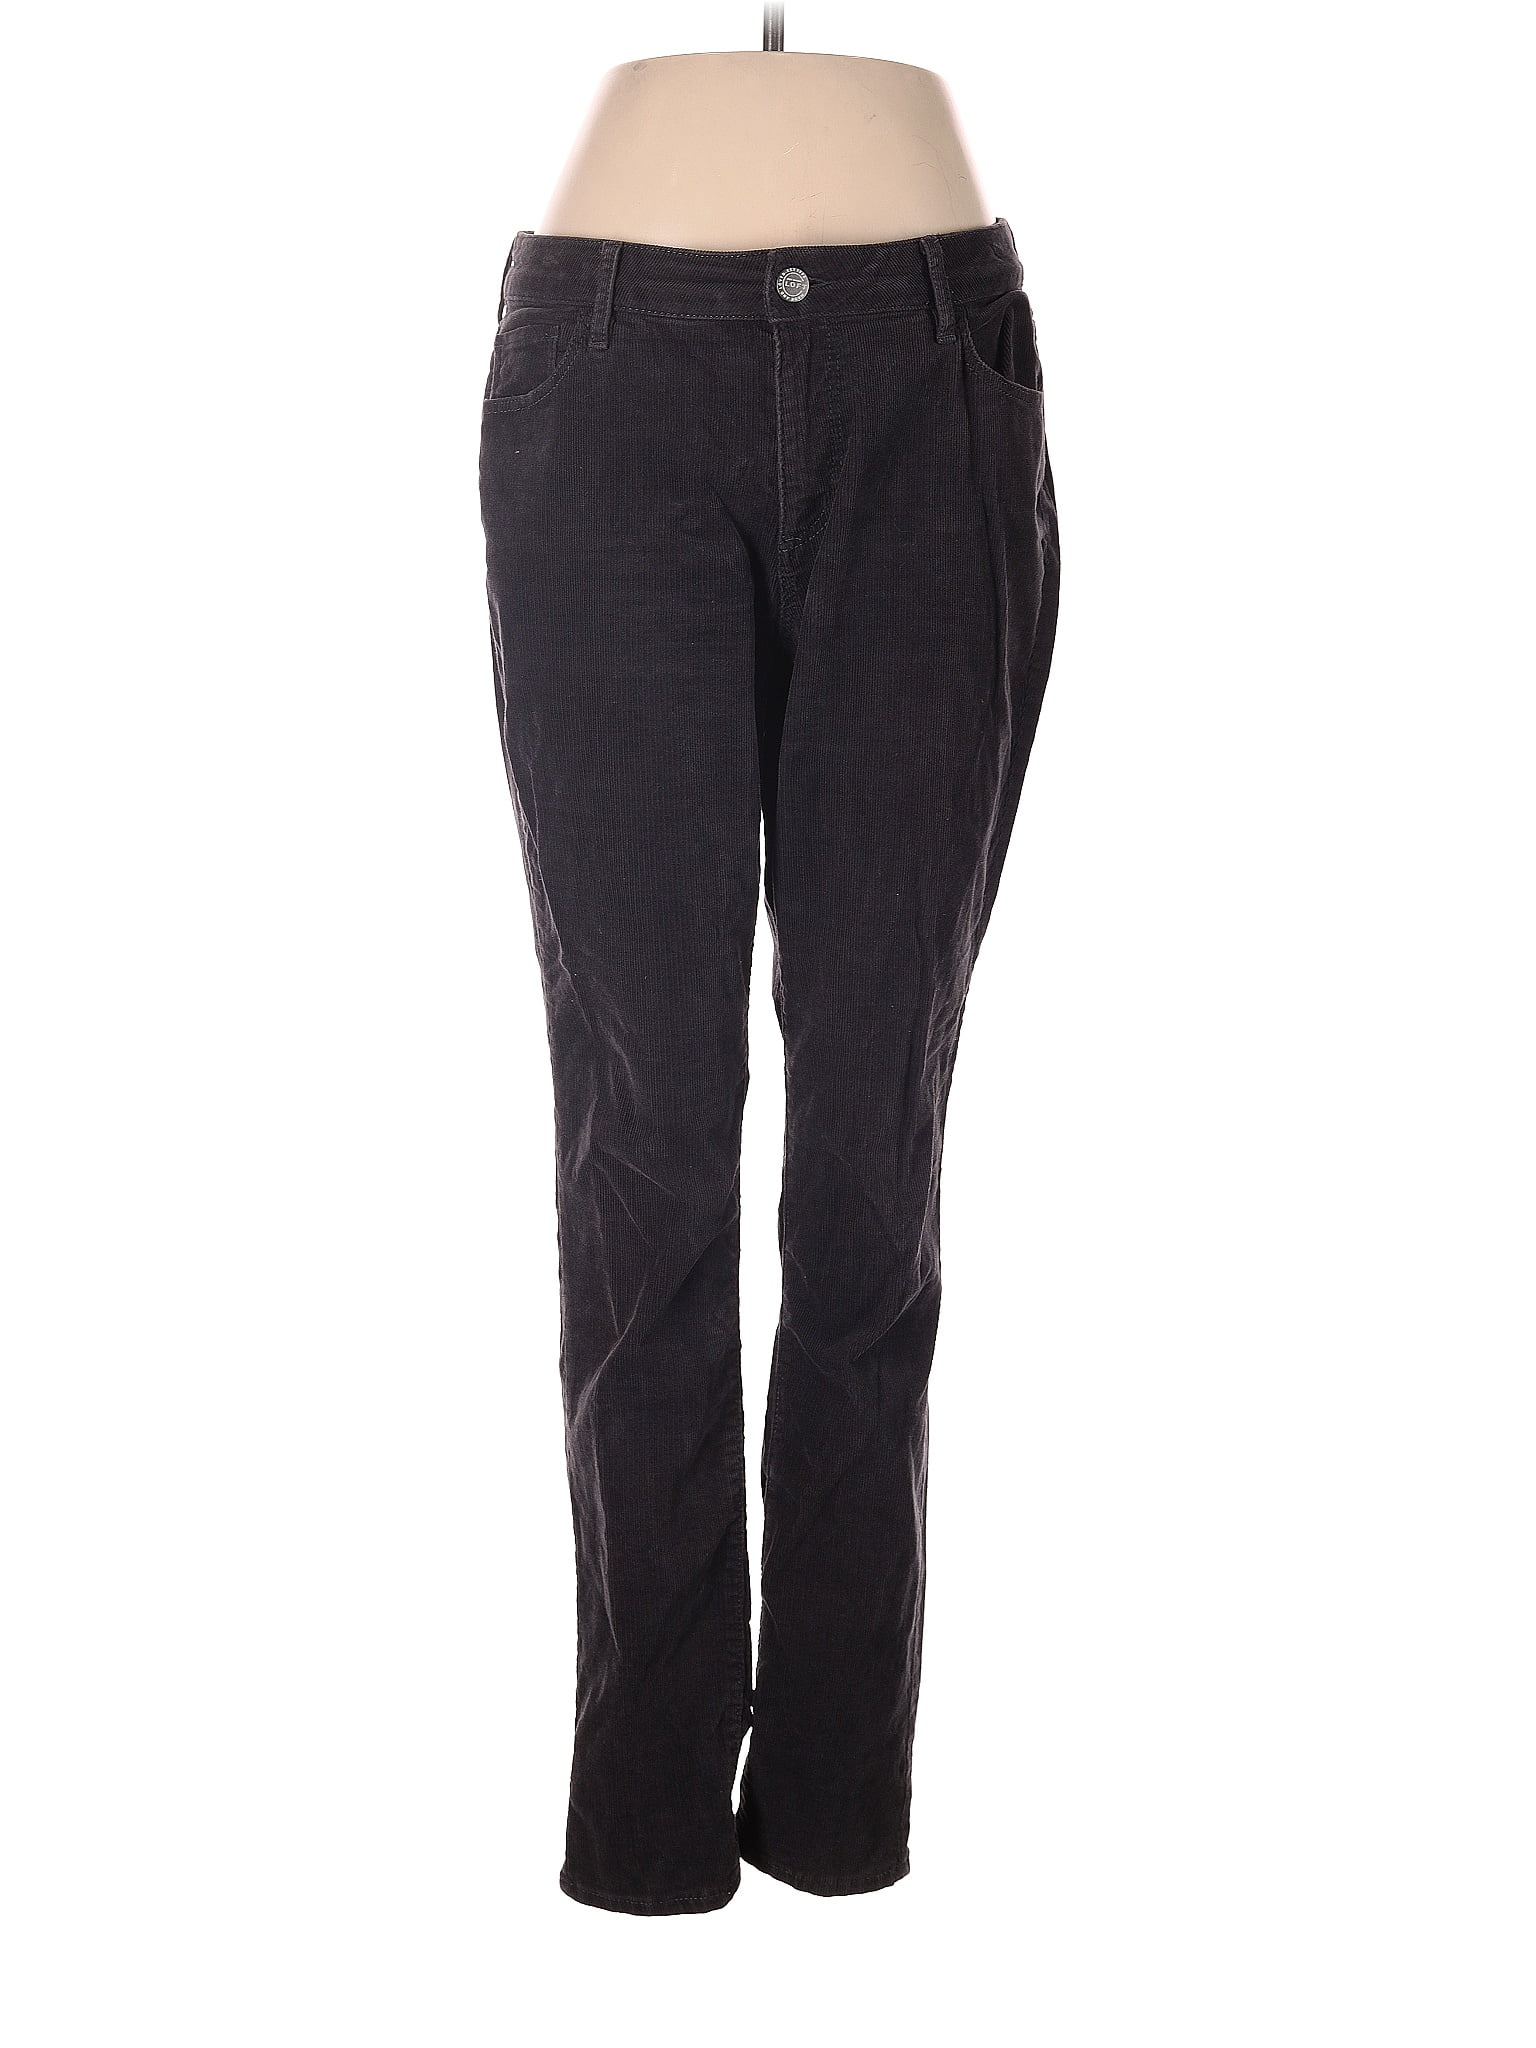 Loft Women's Size S-4 Black Solid Jeggings Pants – Treasures